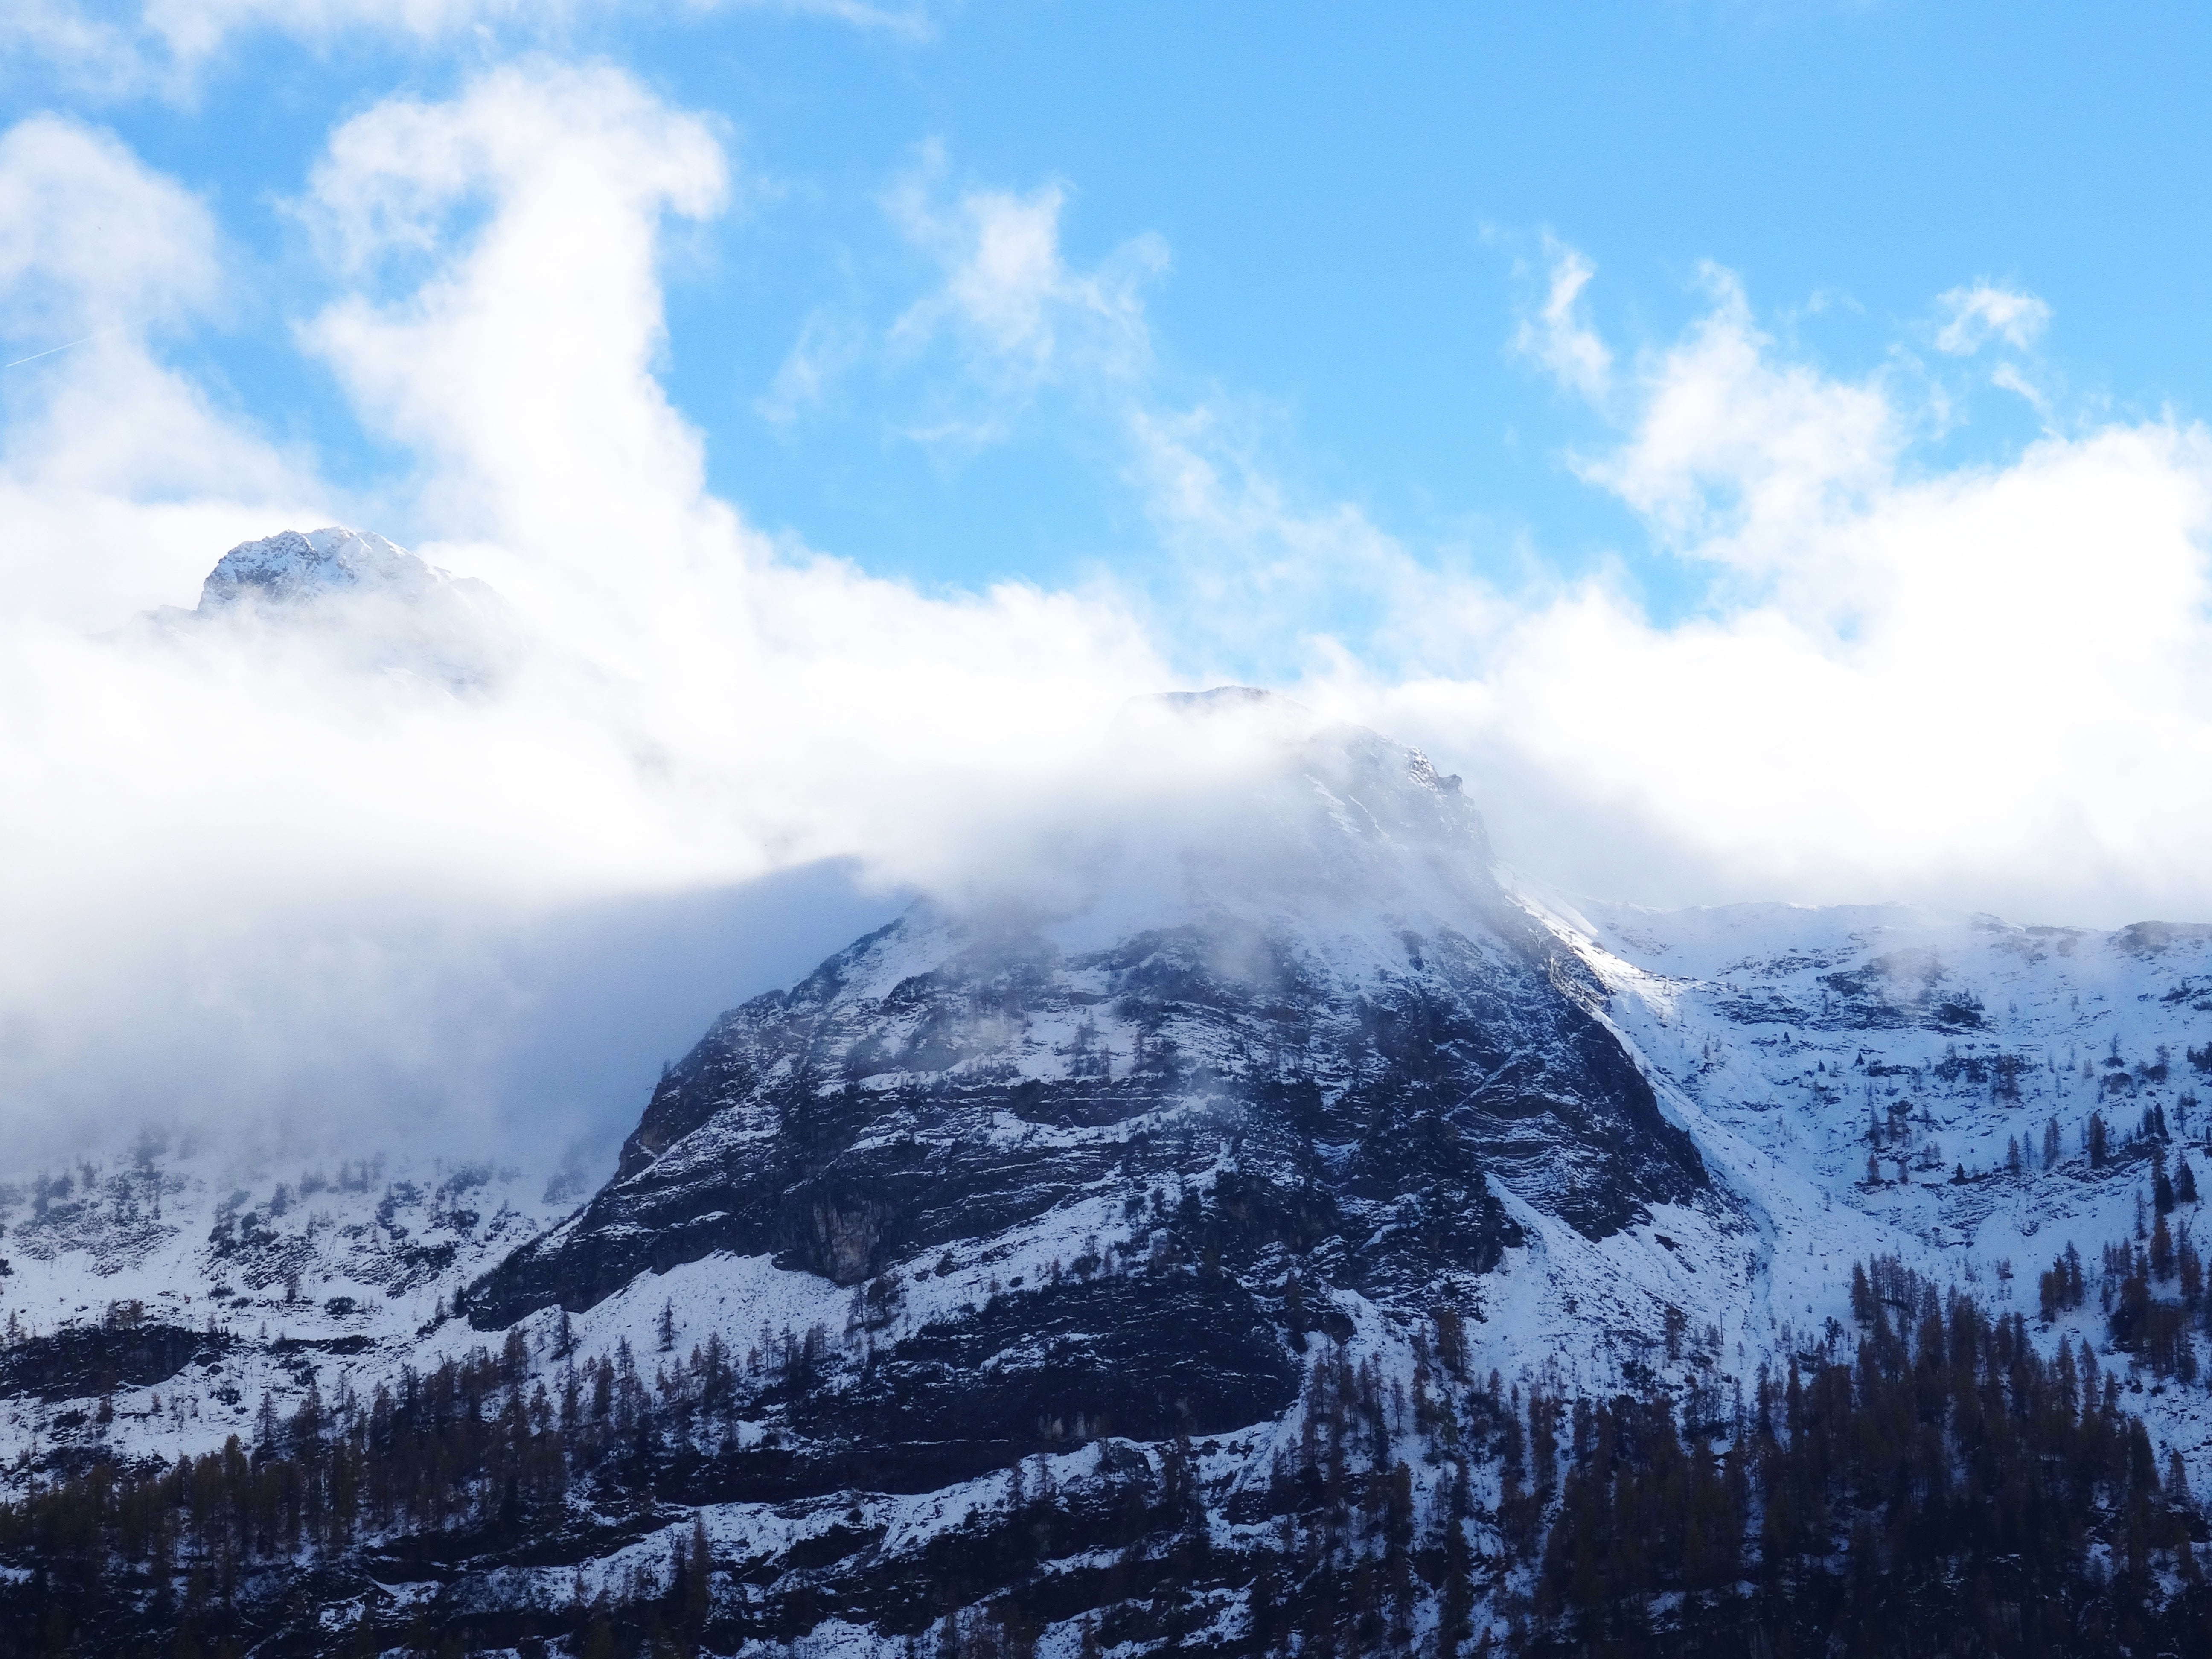 landscape photo of snow mountain range